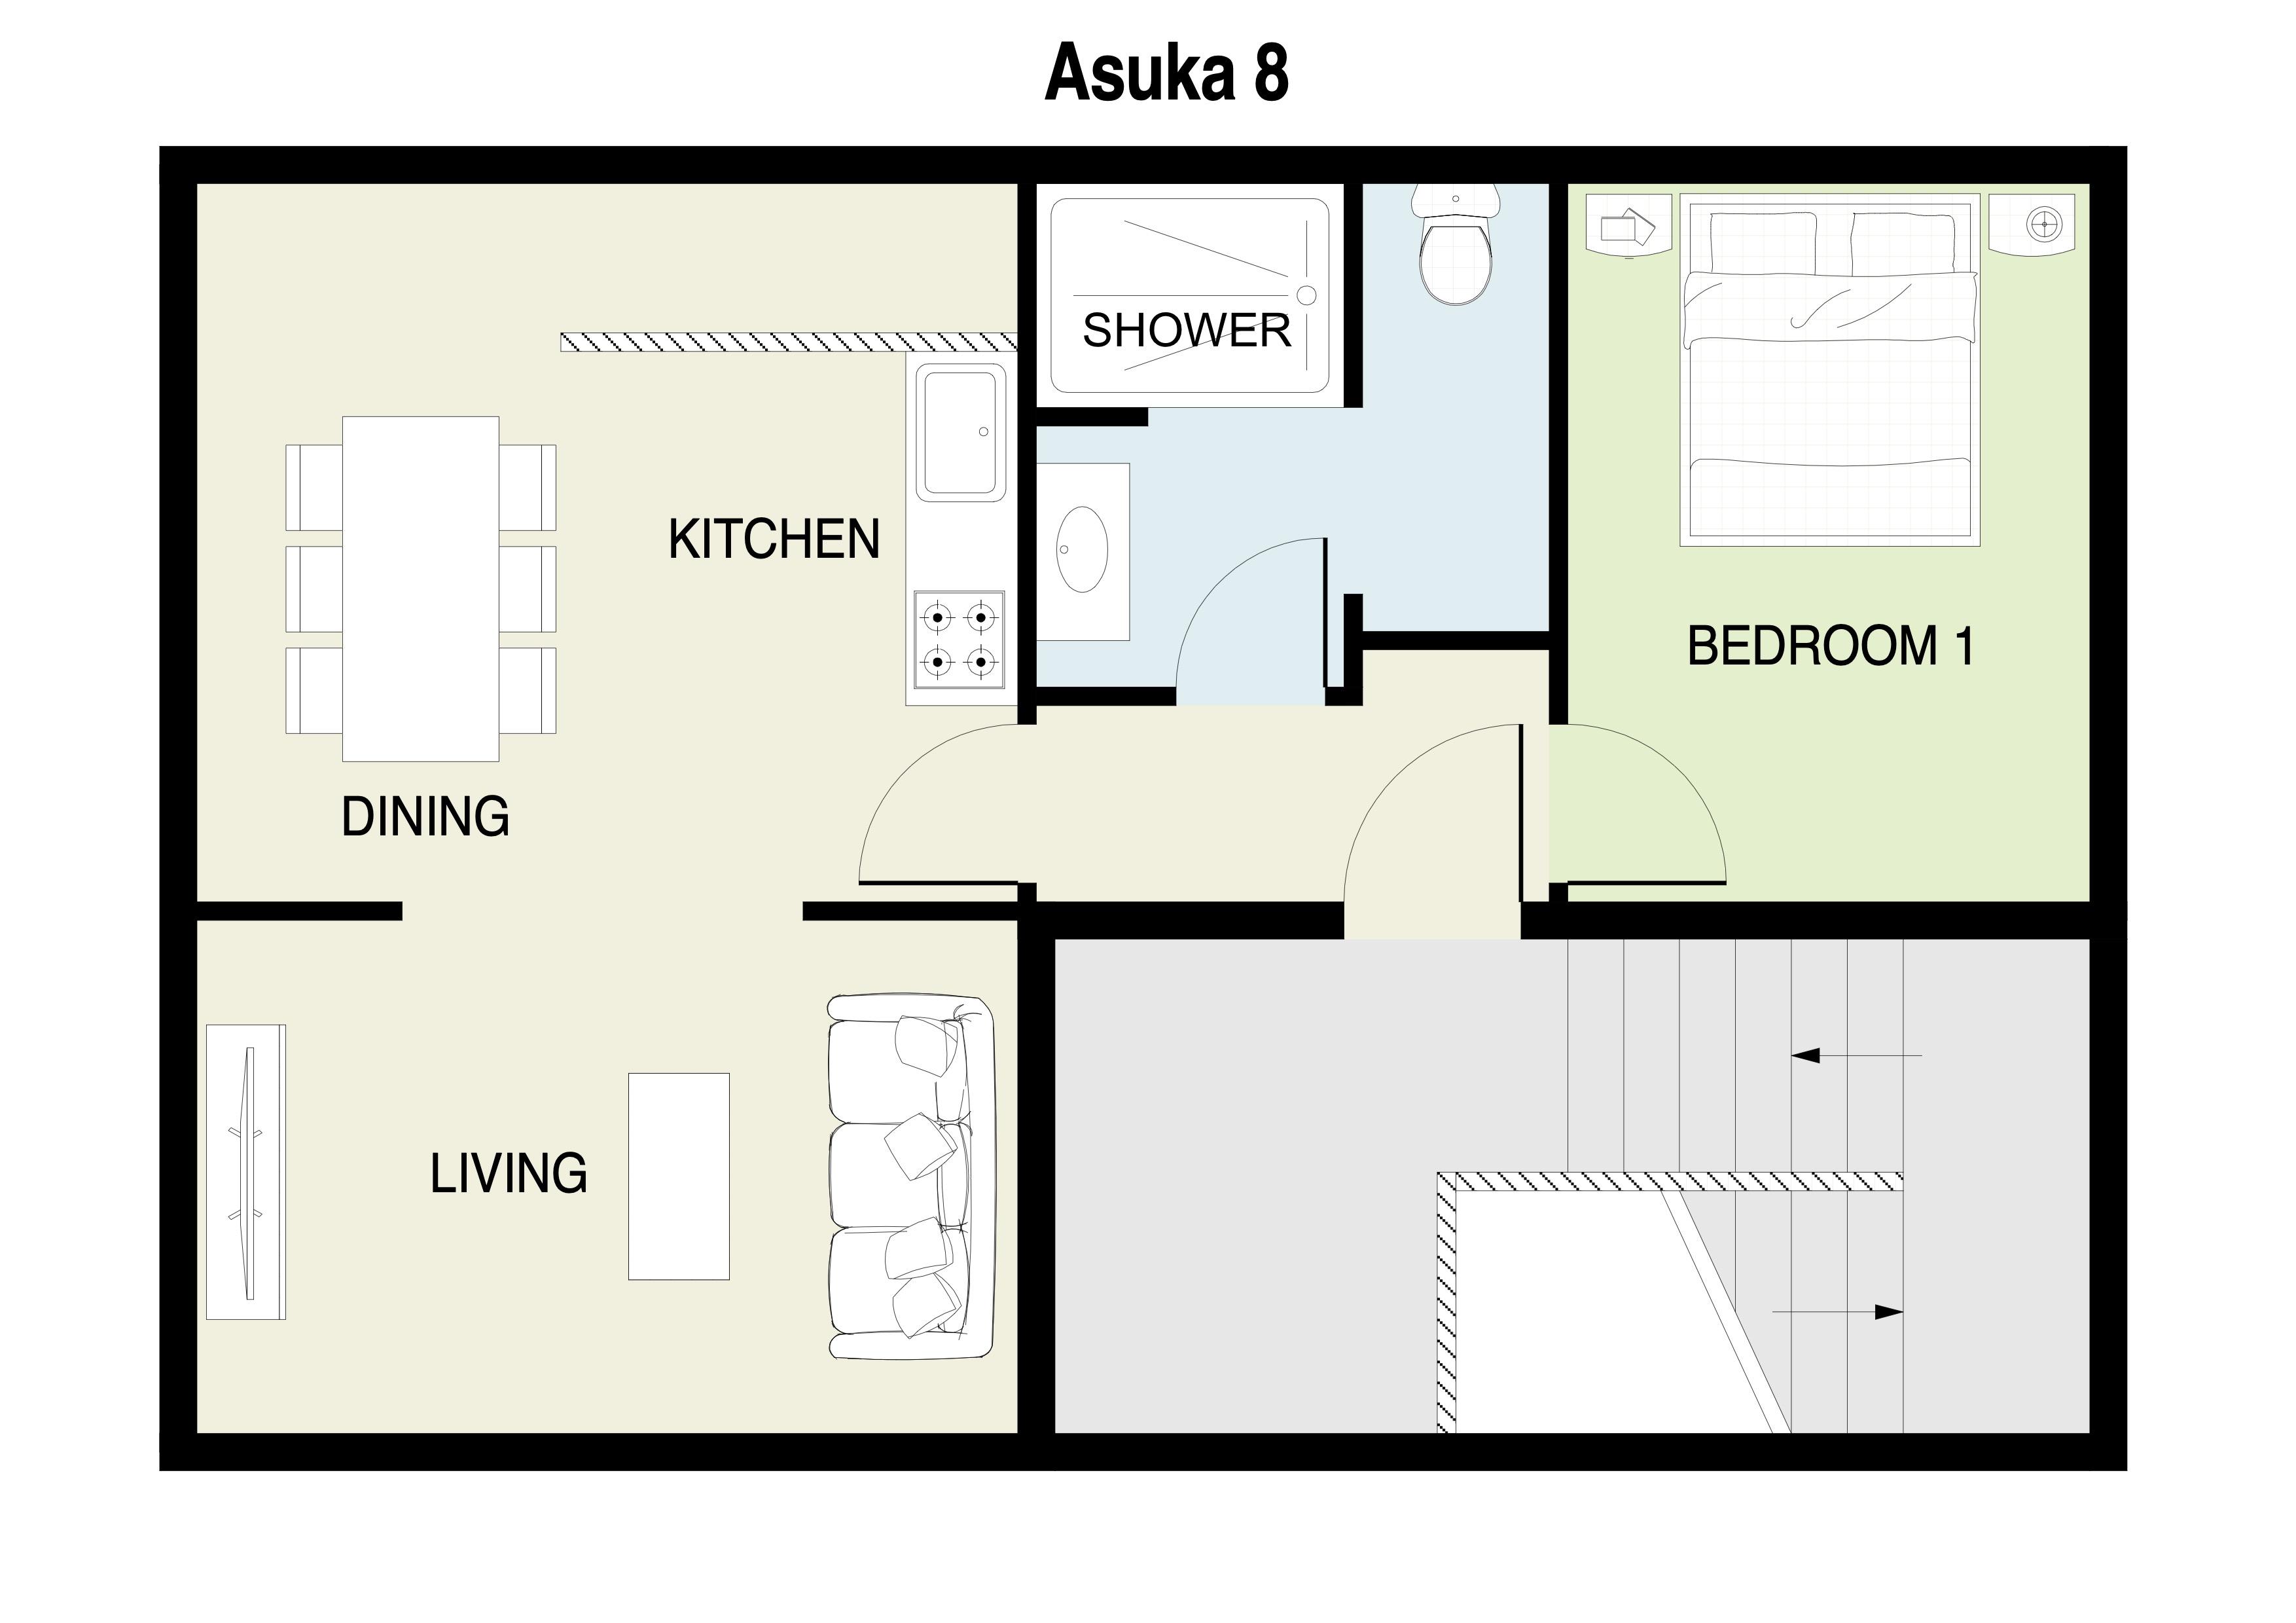 Asuka 8 Floor Plan